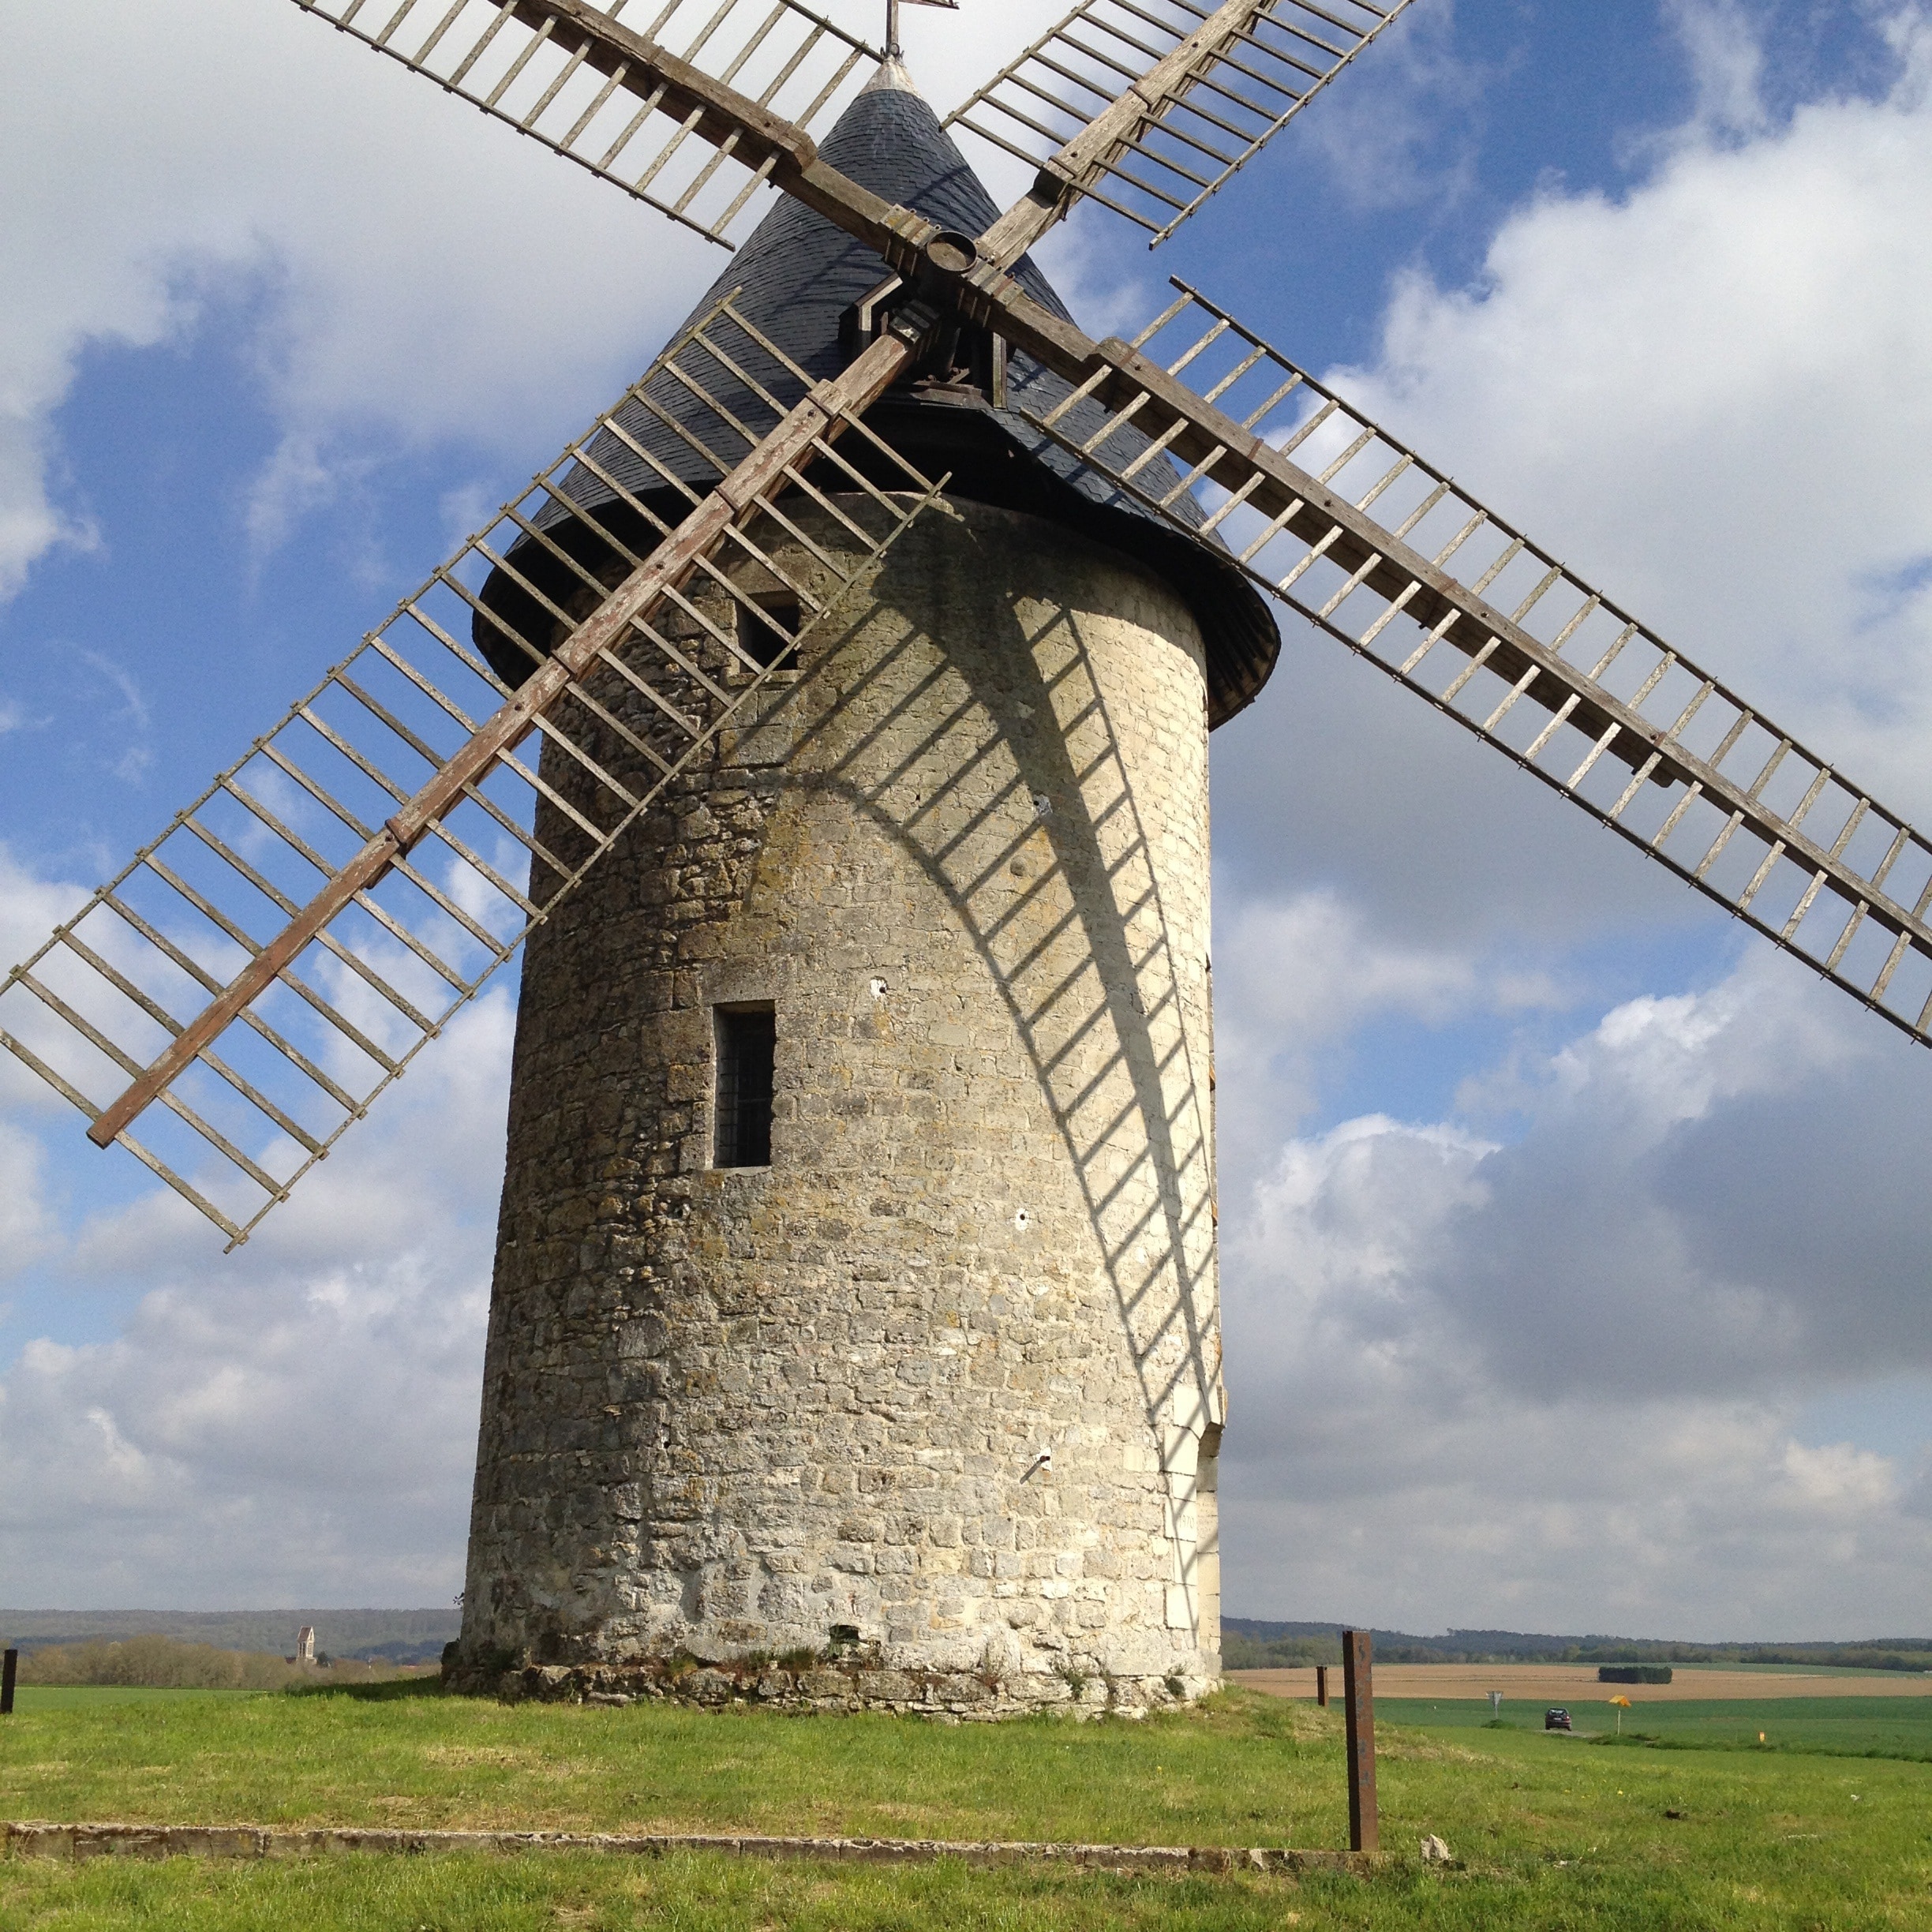 Windmill, Old, Landscape, History, alternative energy, wind power